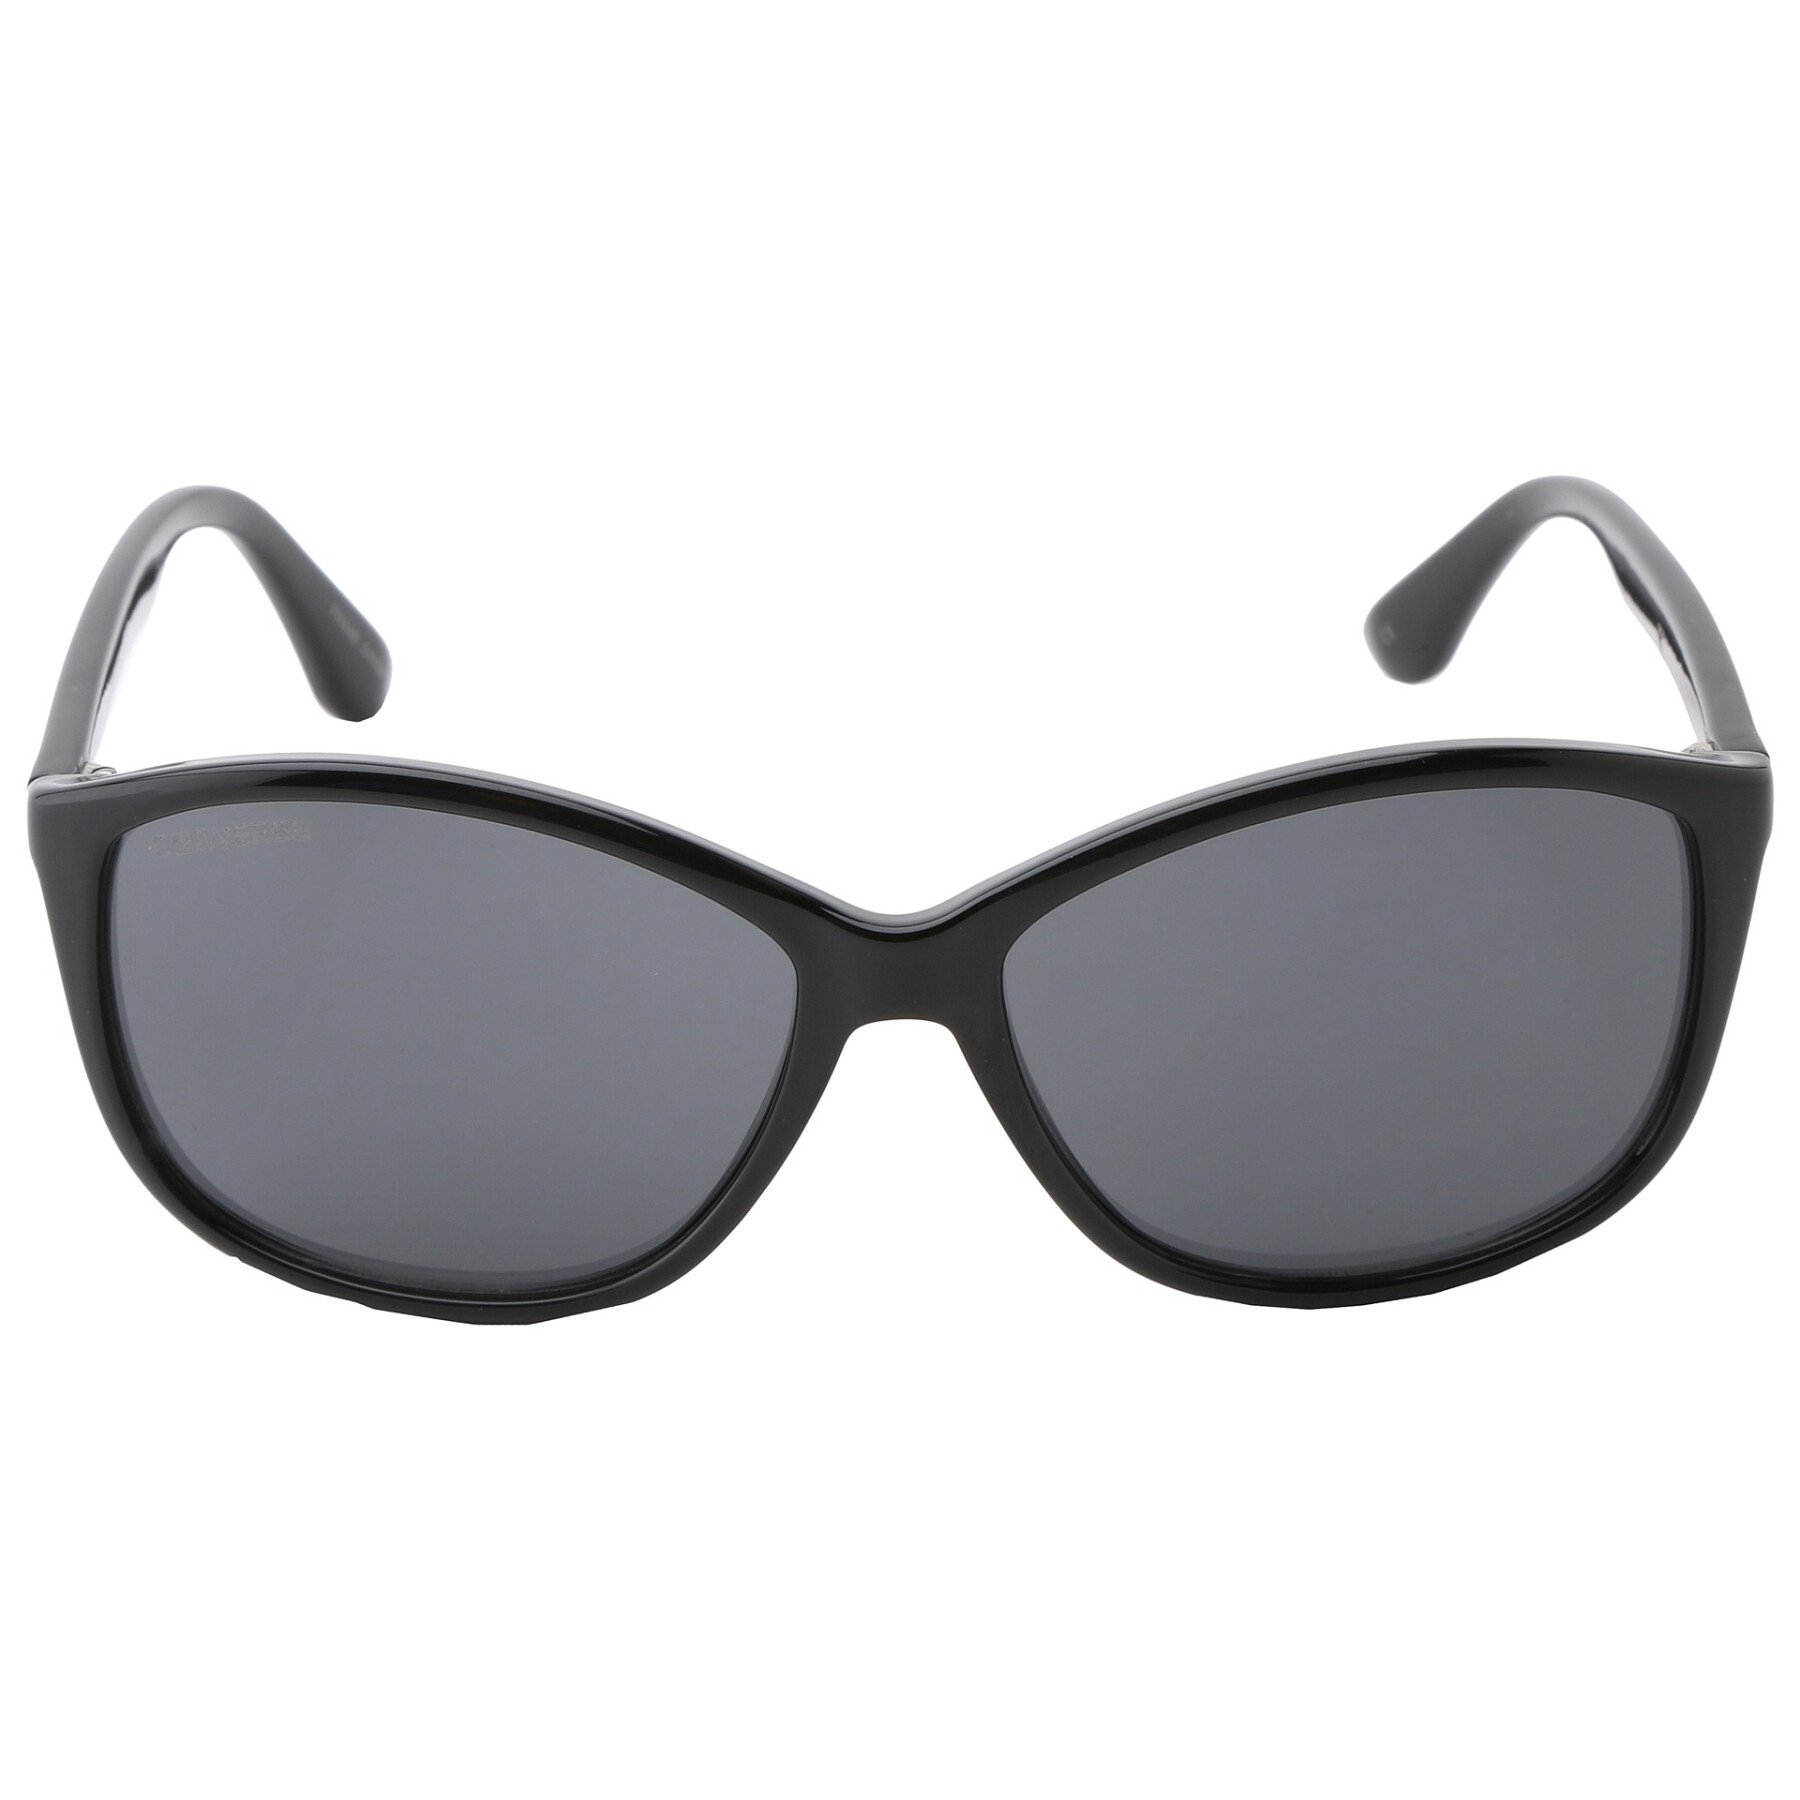 Women's sunglasses Converse CV PEDAL BLAC